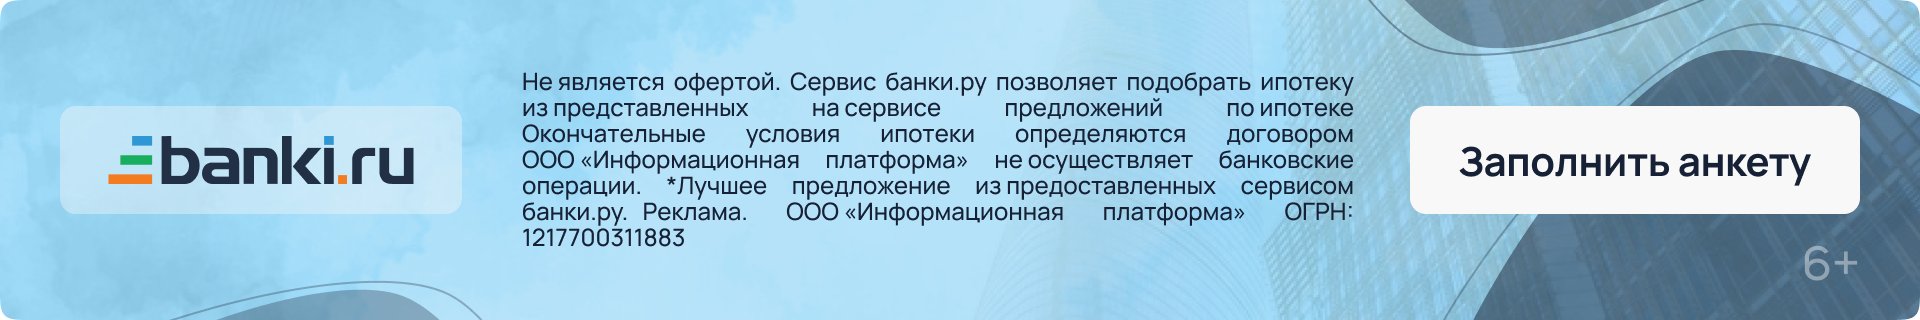 https://bankipartners.ru/s/dFwLYfRJvJ?statid=1051_&erid=2VtzqvsHQp4